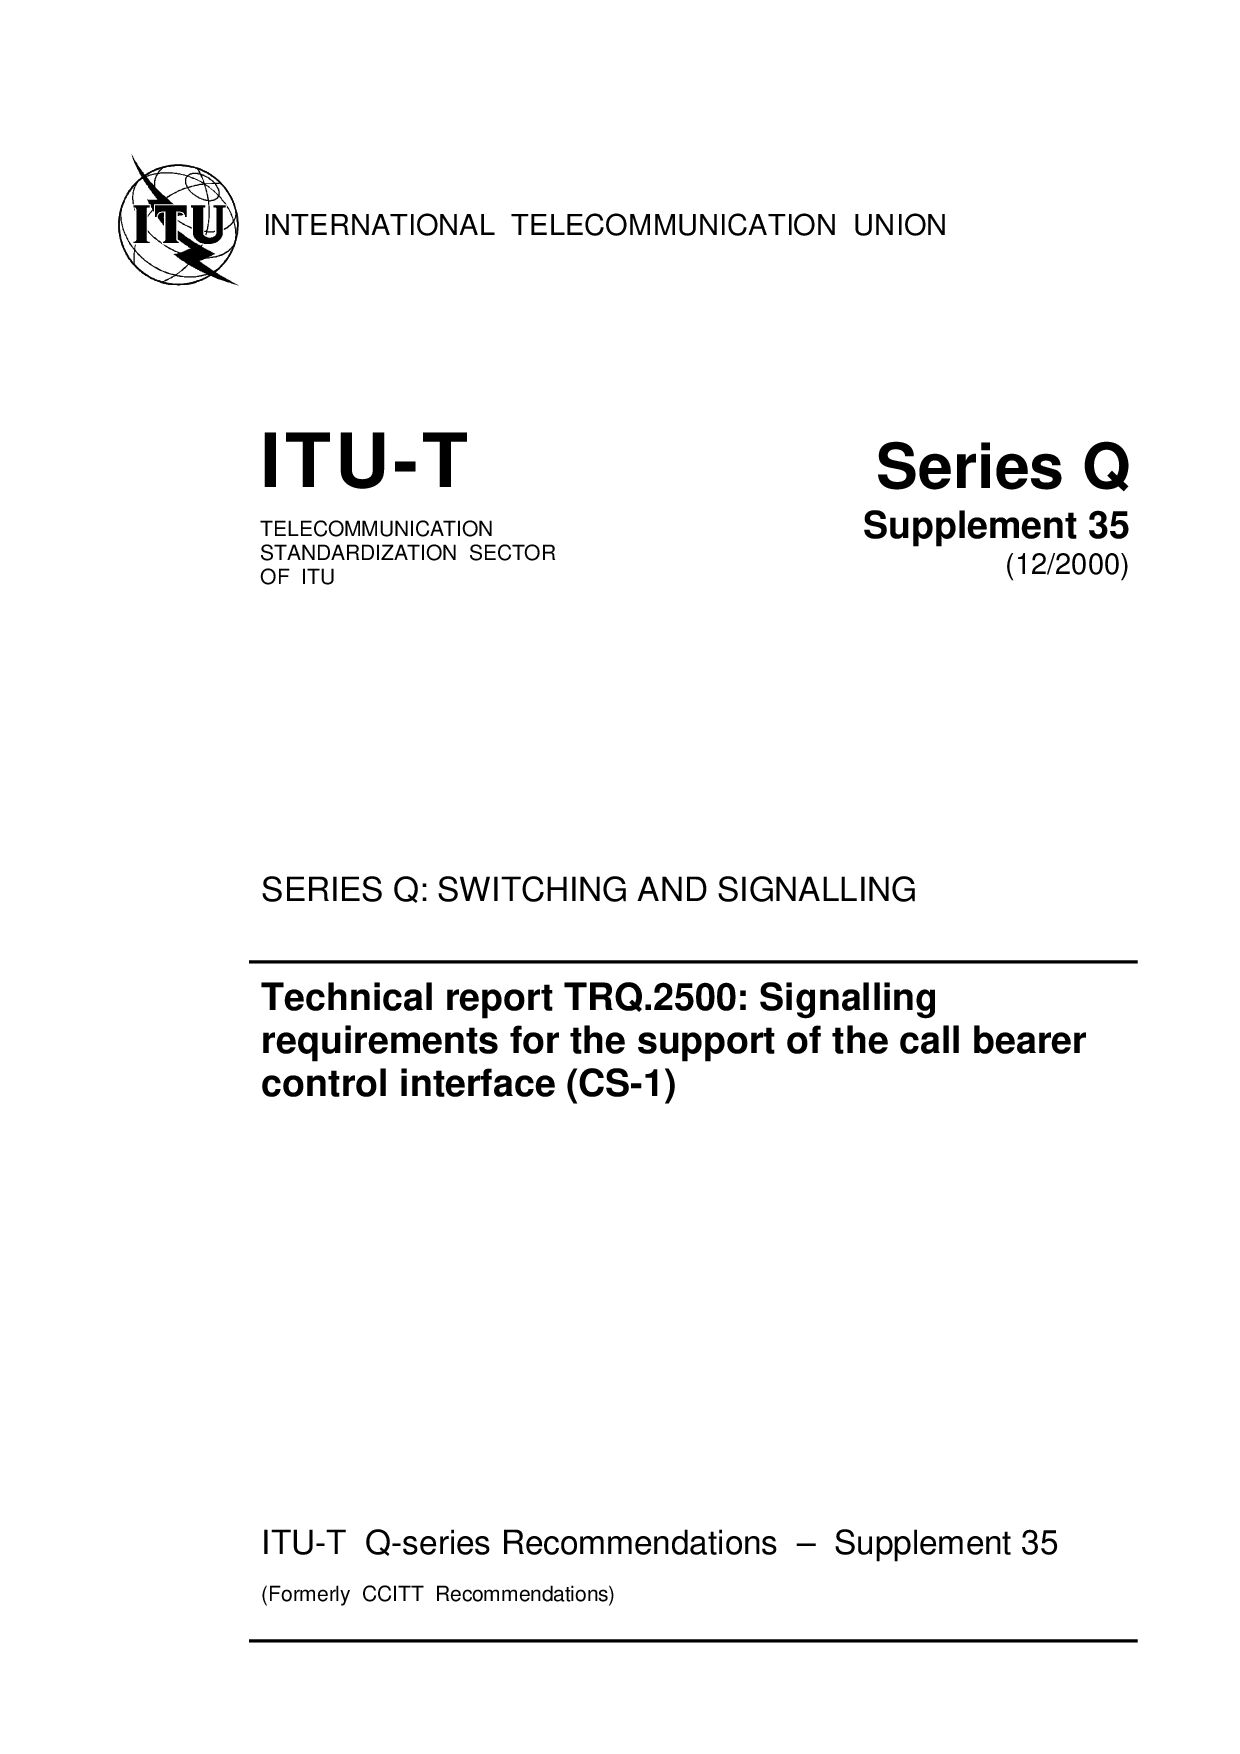 ITU-T SERIES Q SUPP 35-2000